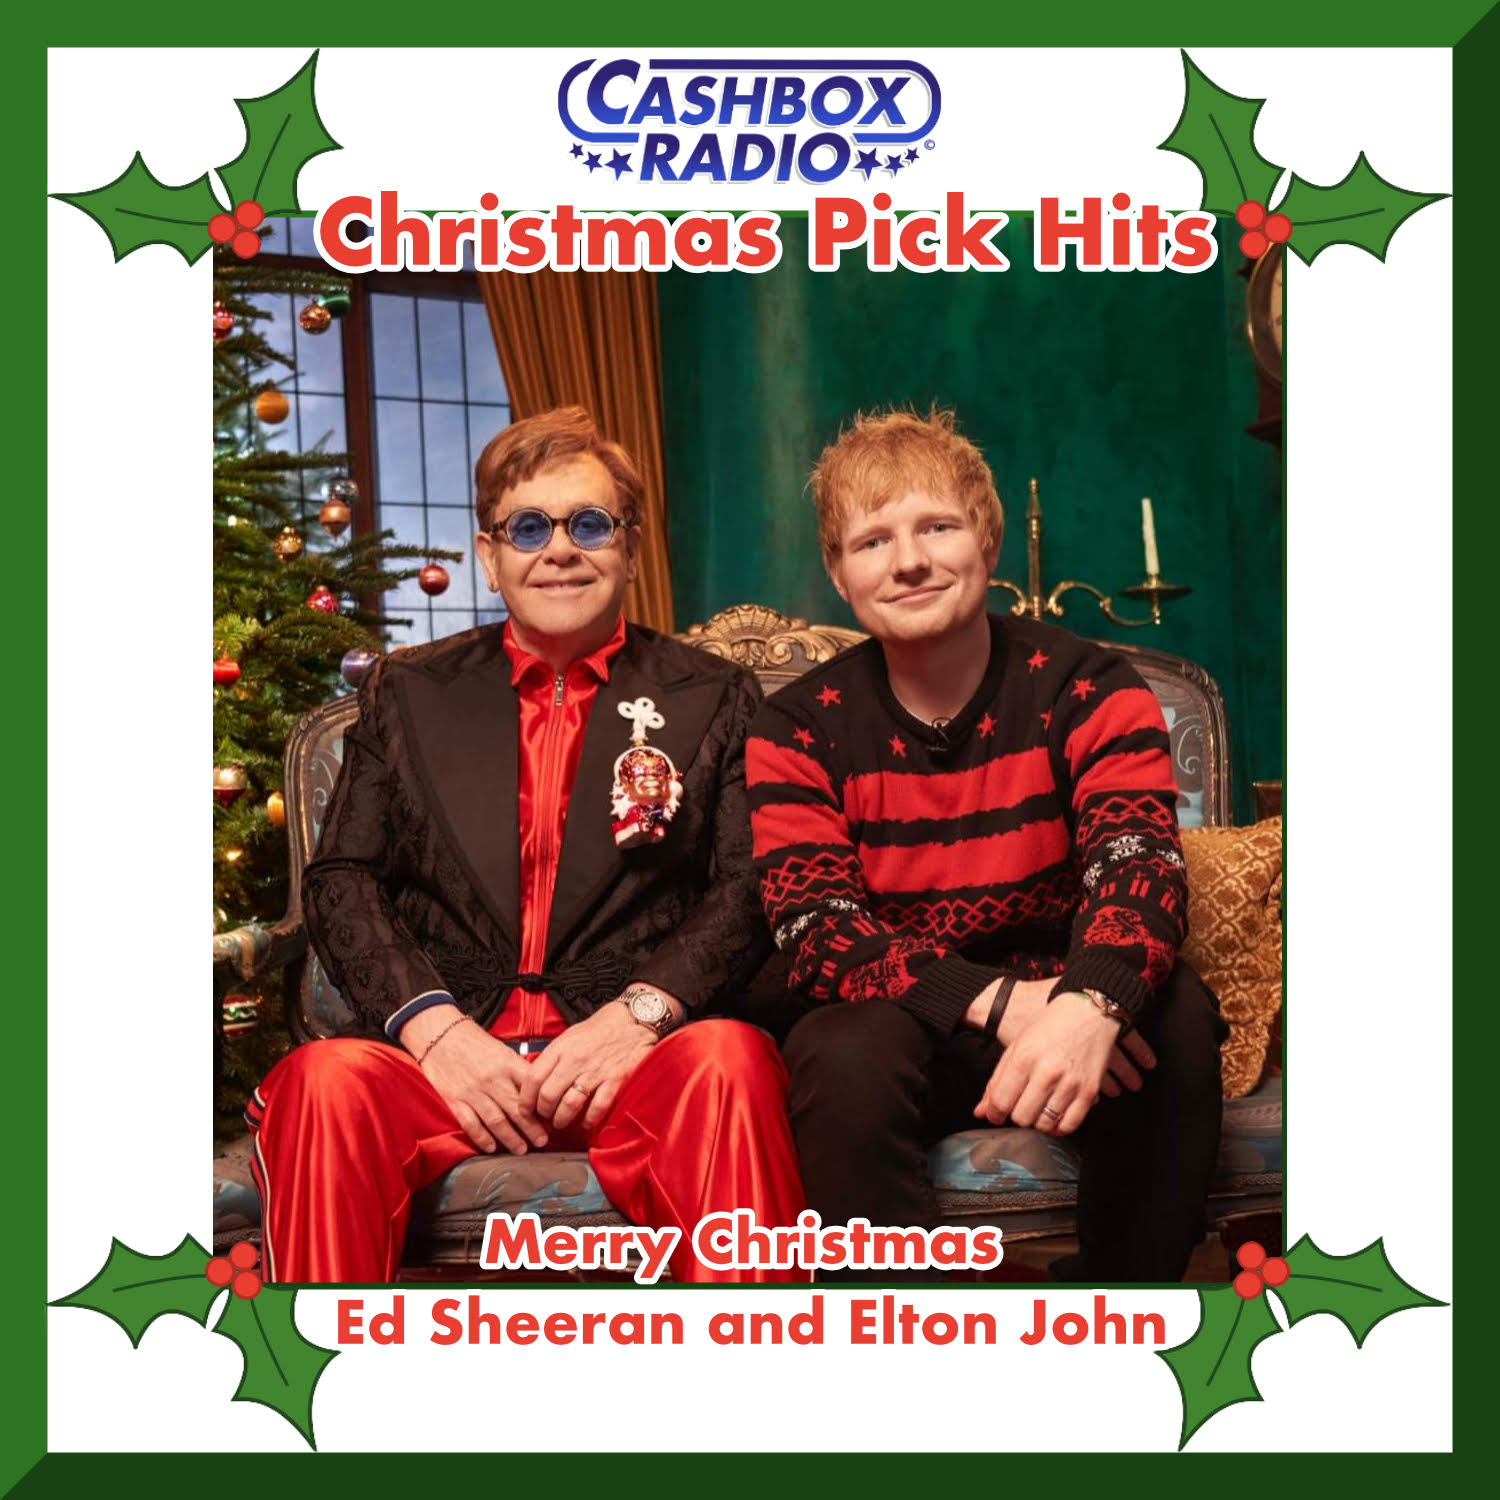 Merry Christmas - Ed Sheeran and Elton John